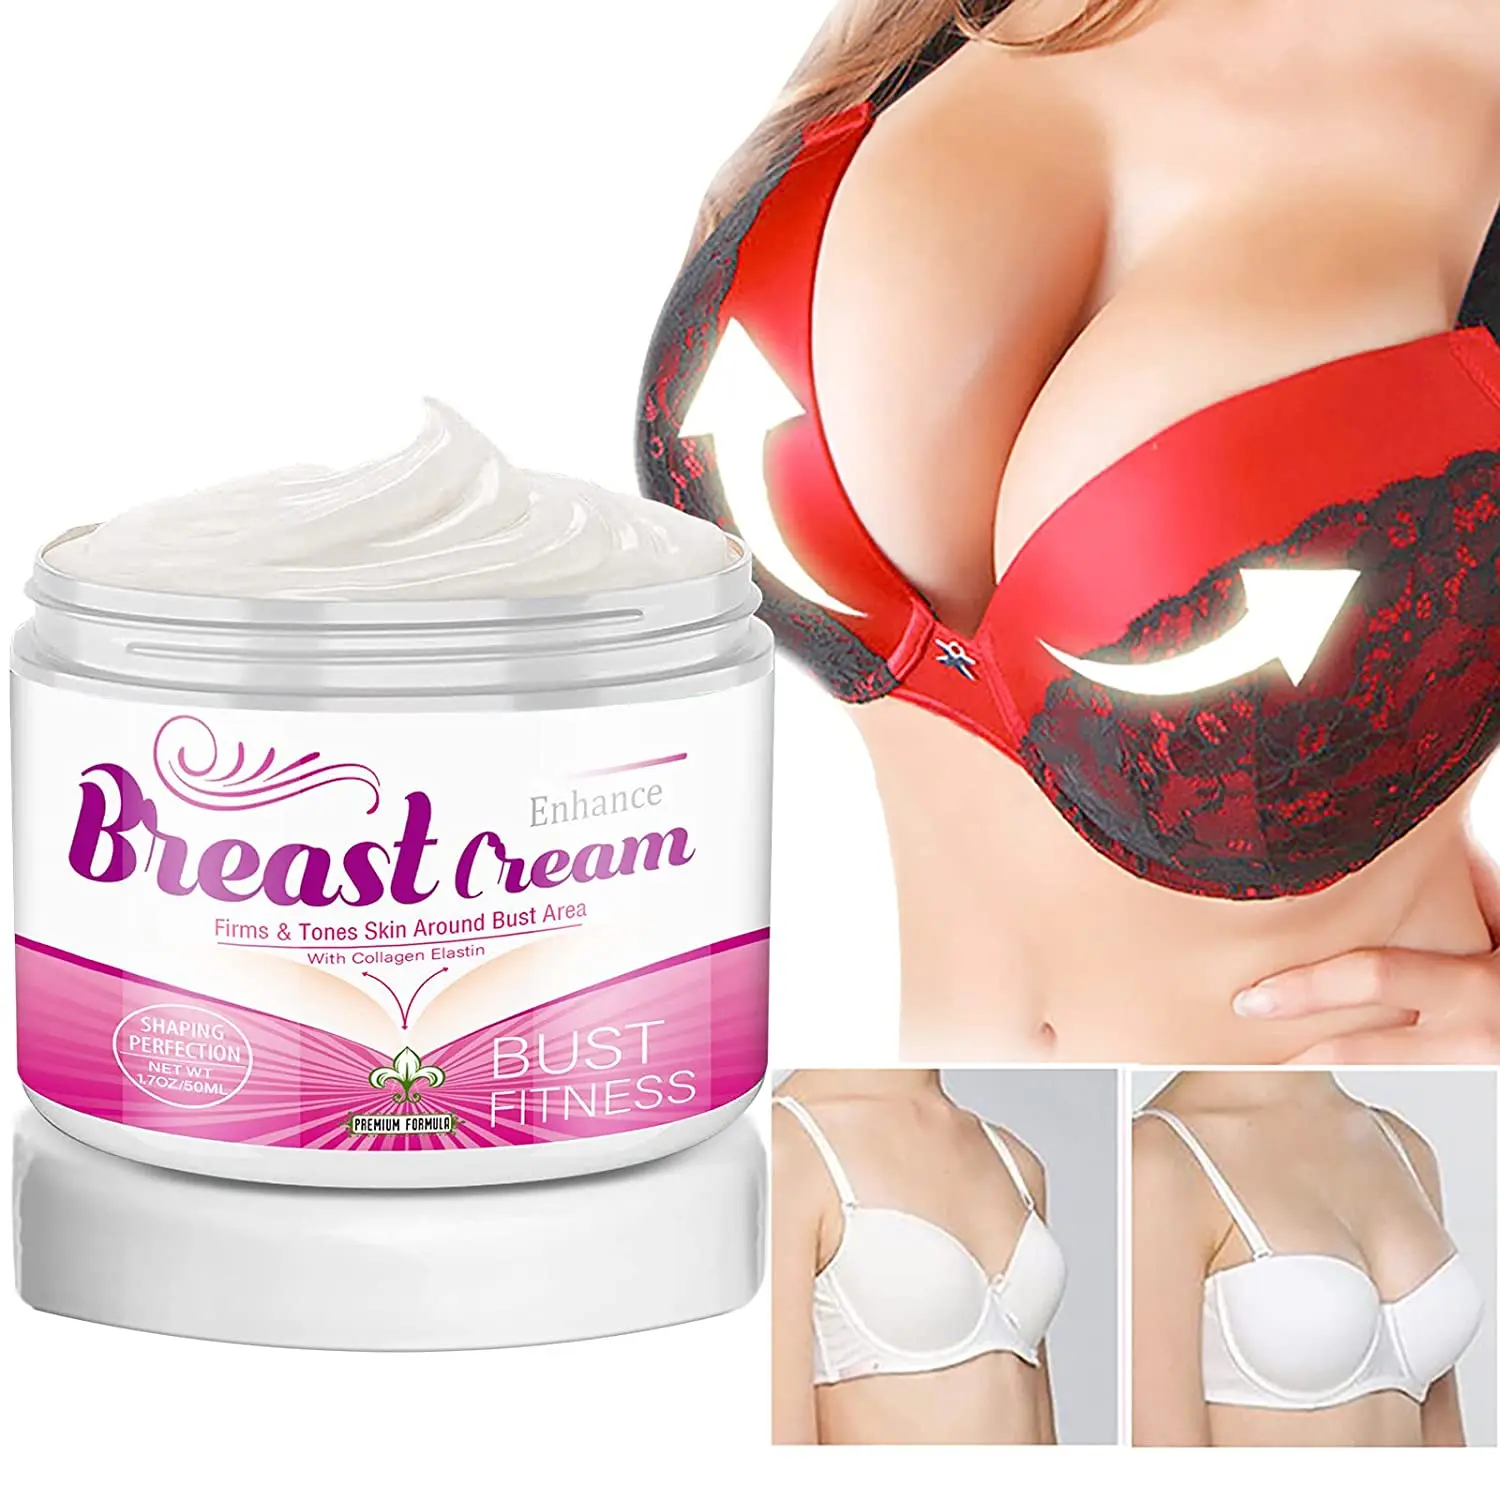 

New Arrival Natural Organic Big Boobs Cream Fast Naturaful Breast Enhancer Cream Herbal Breast Enhancement Cream